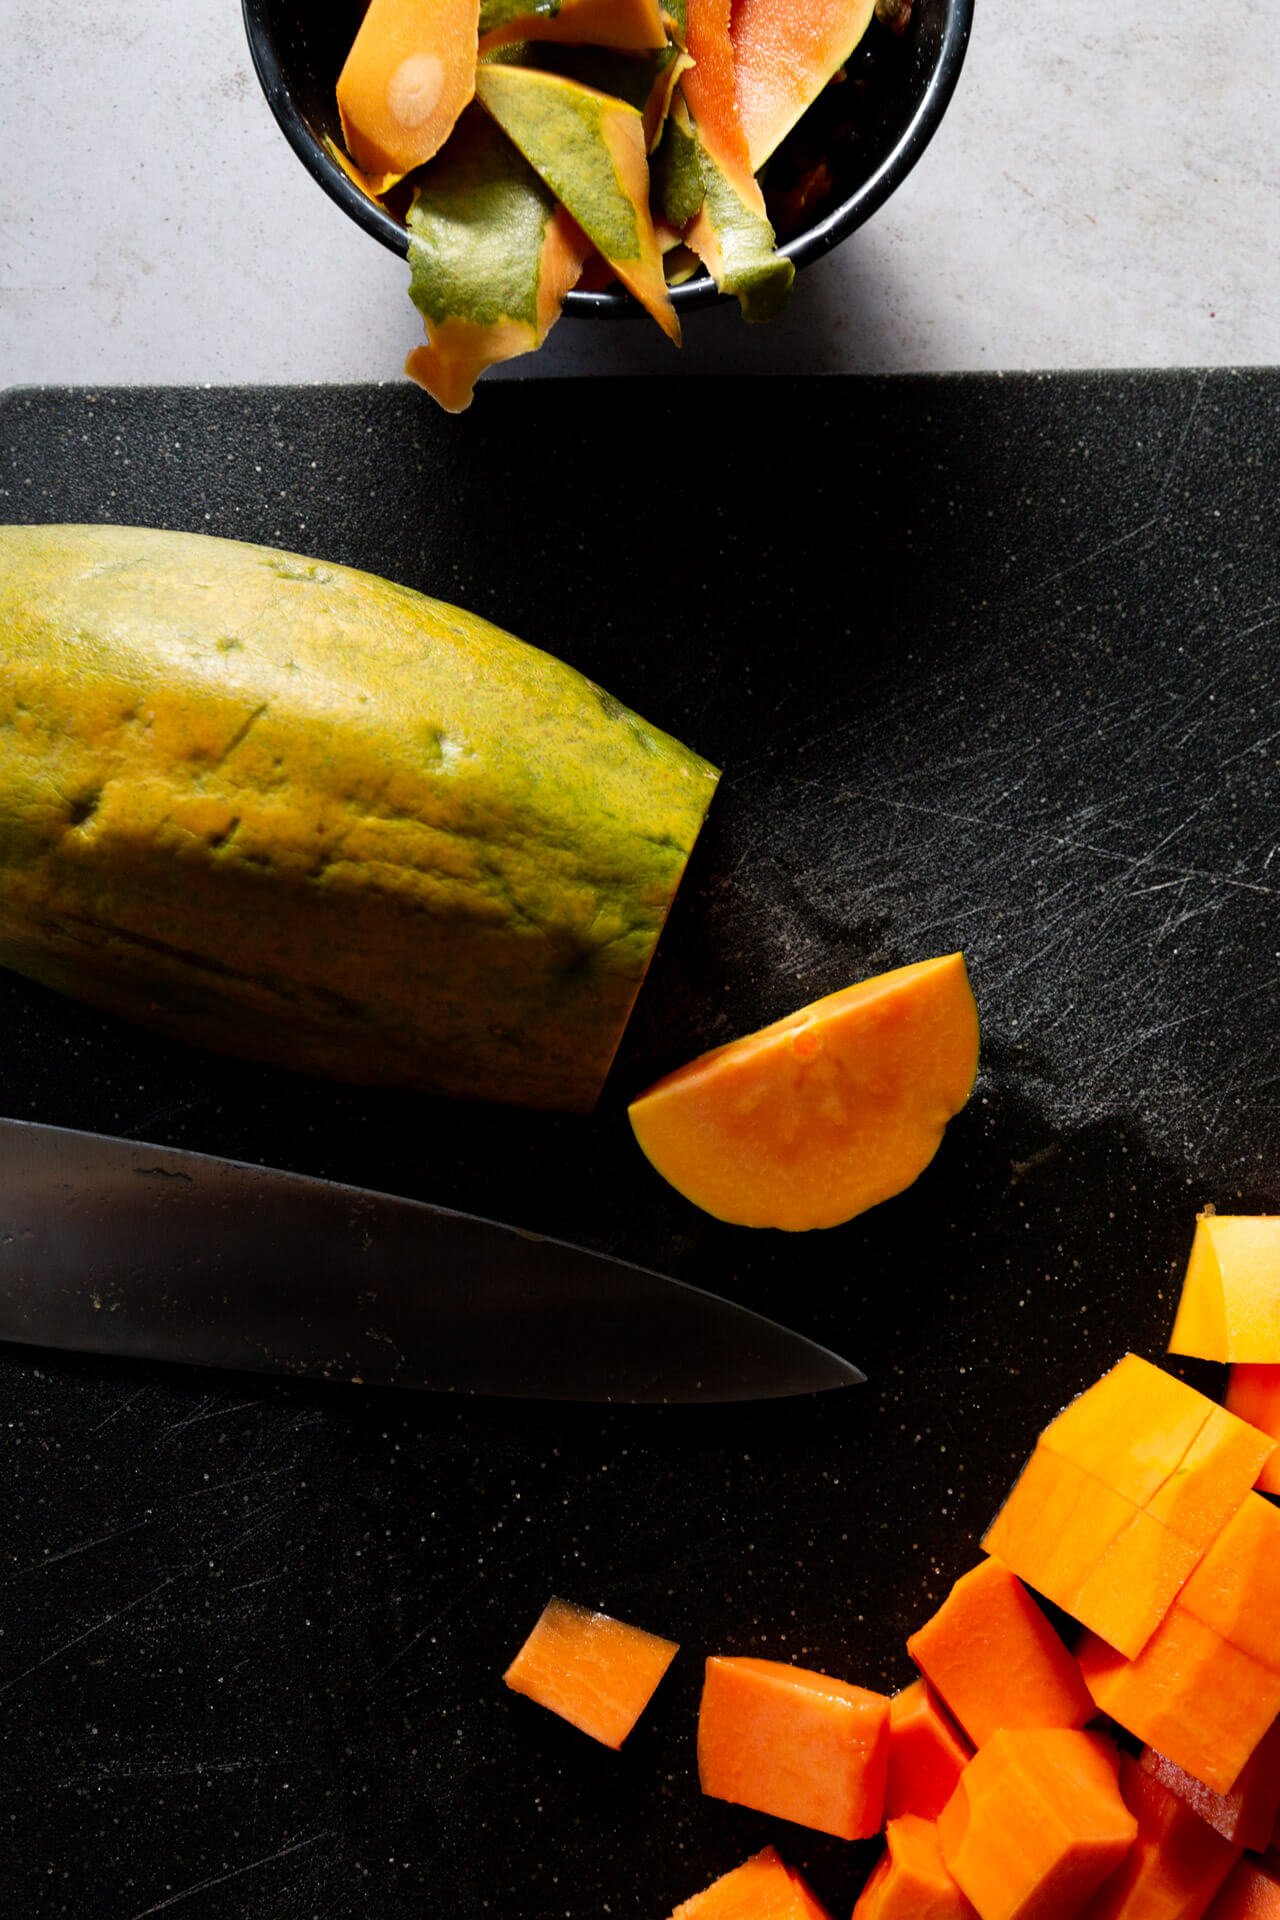 halfed papaya without the tip